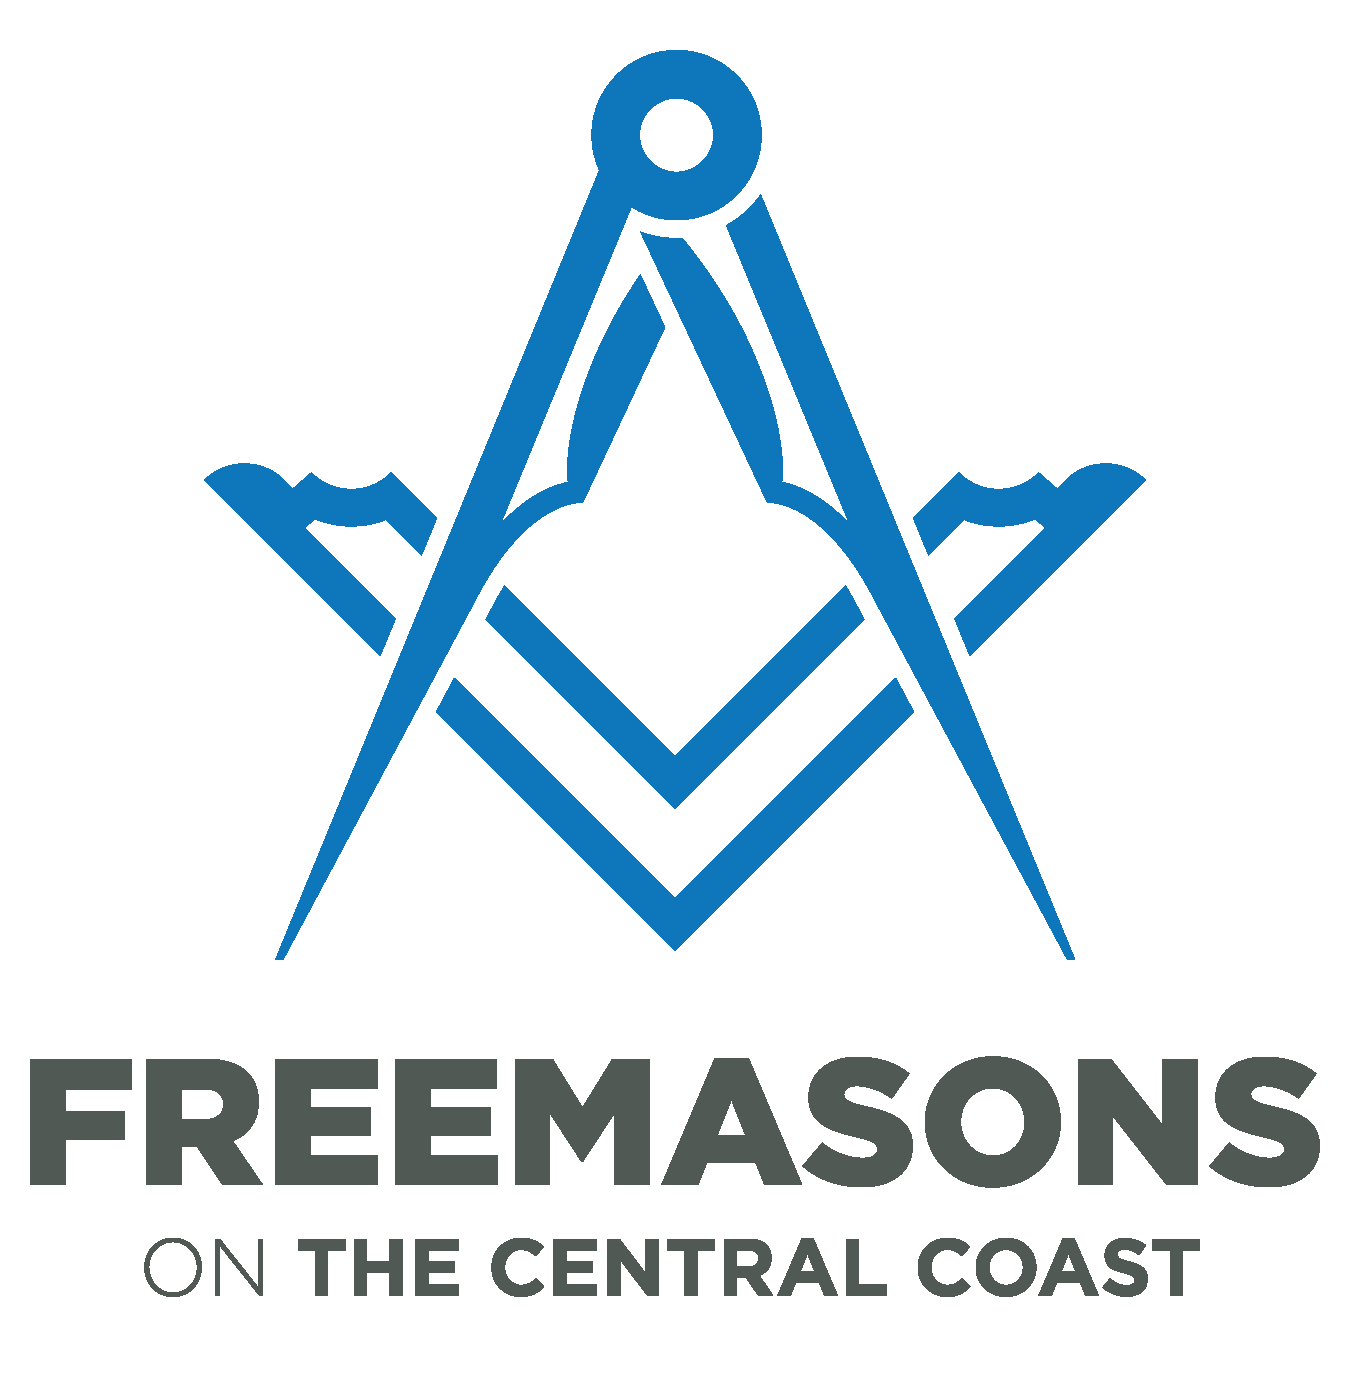 Freemasons on the Central Coast